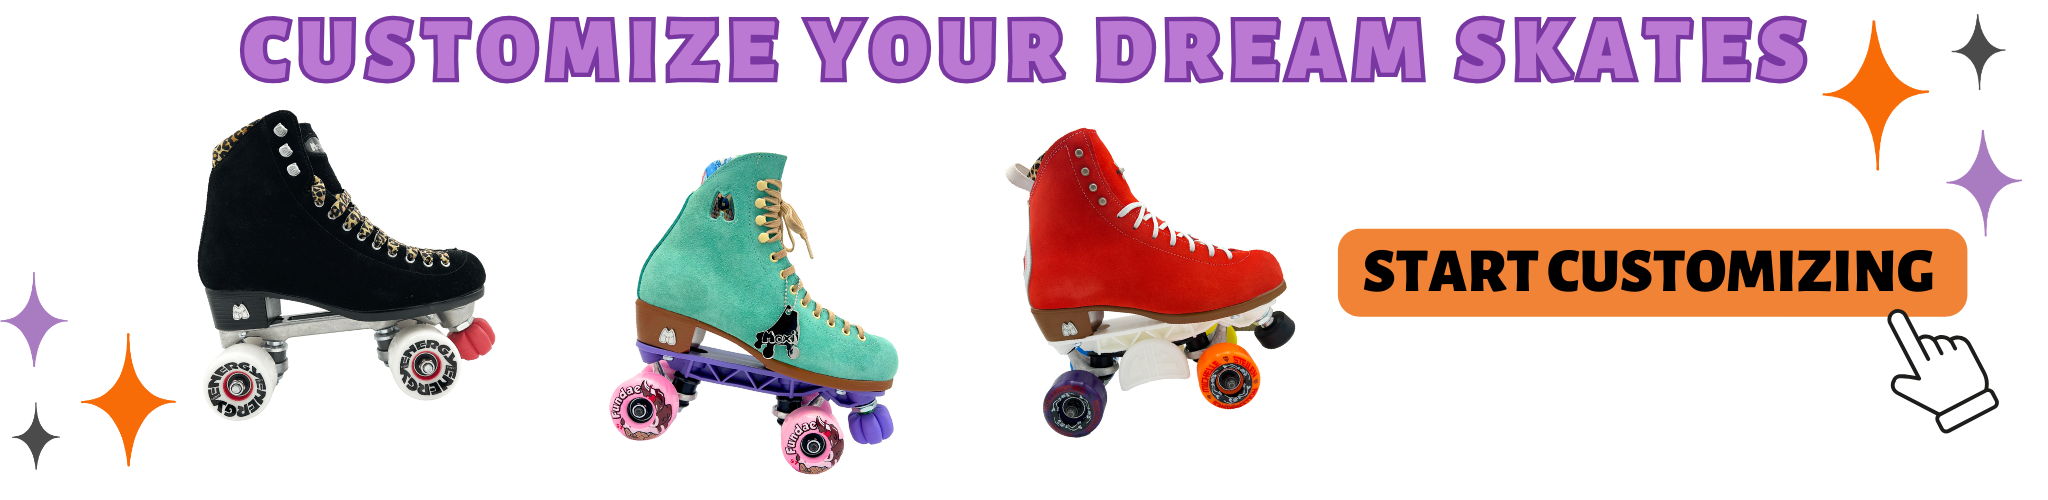 customize your dream skates